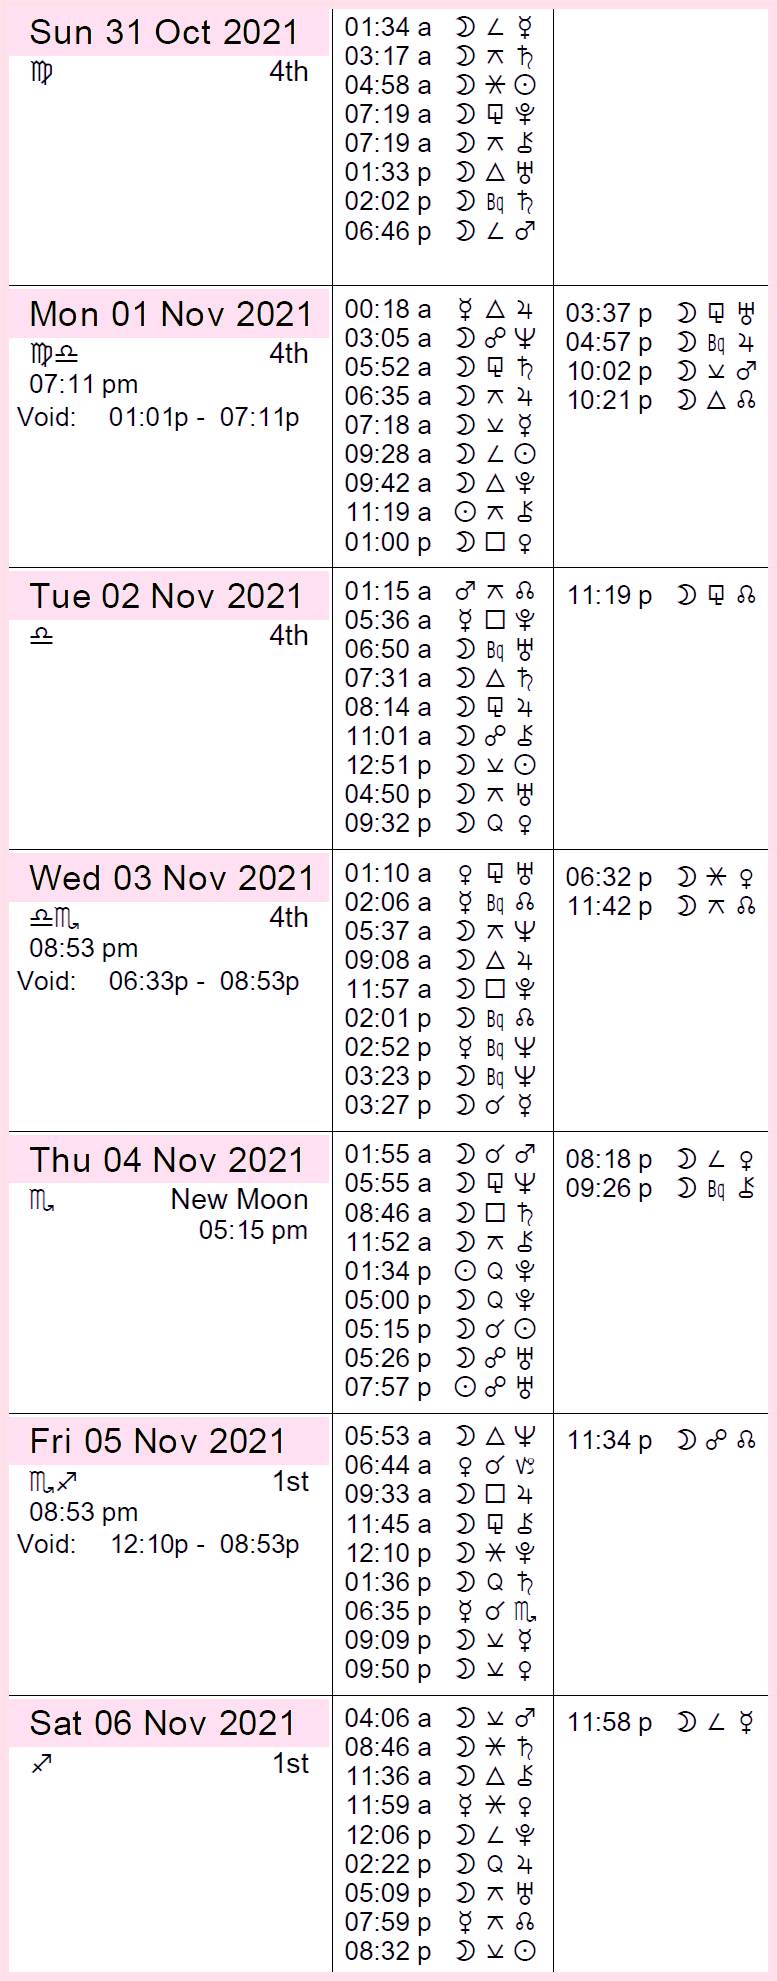 This Week in Astrology Calendar: October 31 to November 6, 2021